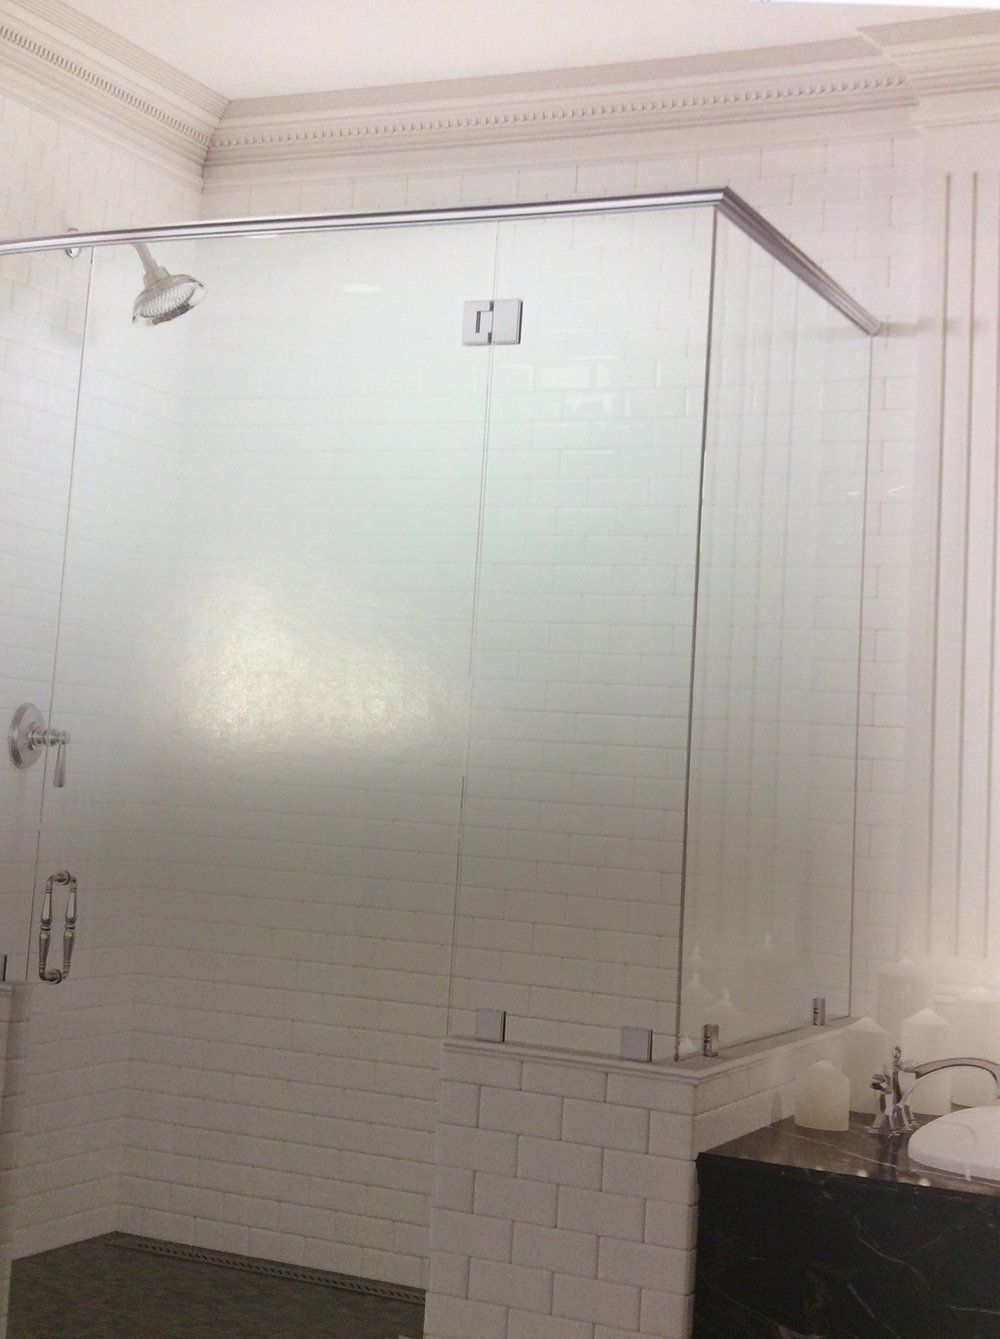 Shower door glass installation service